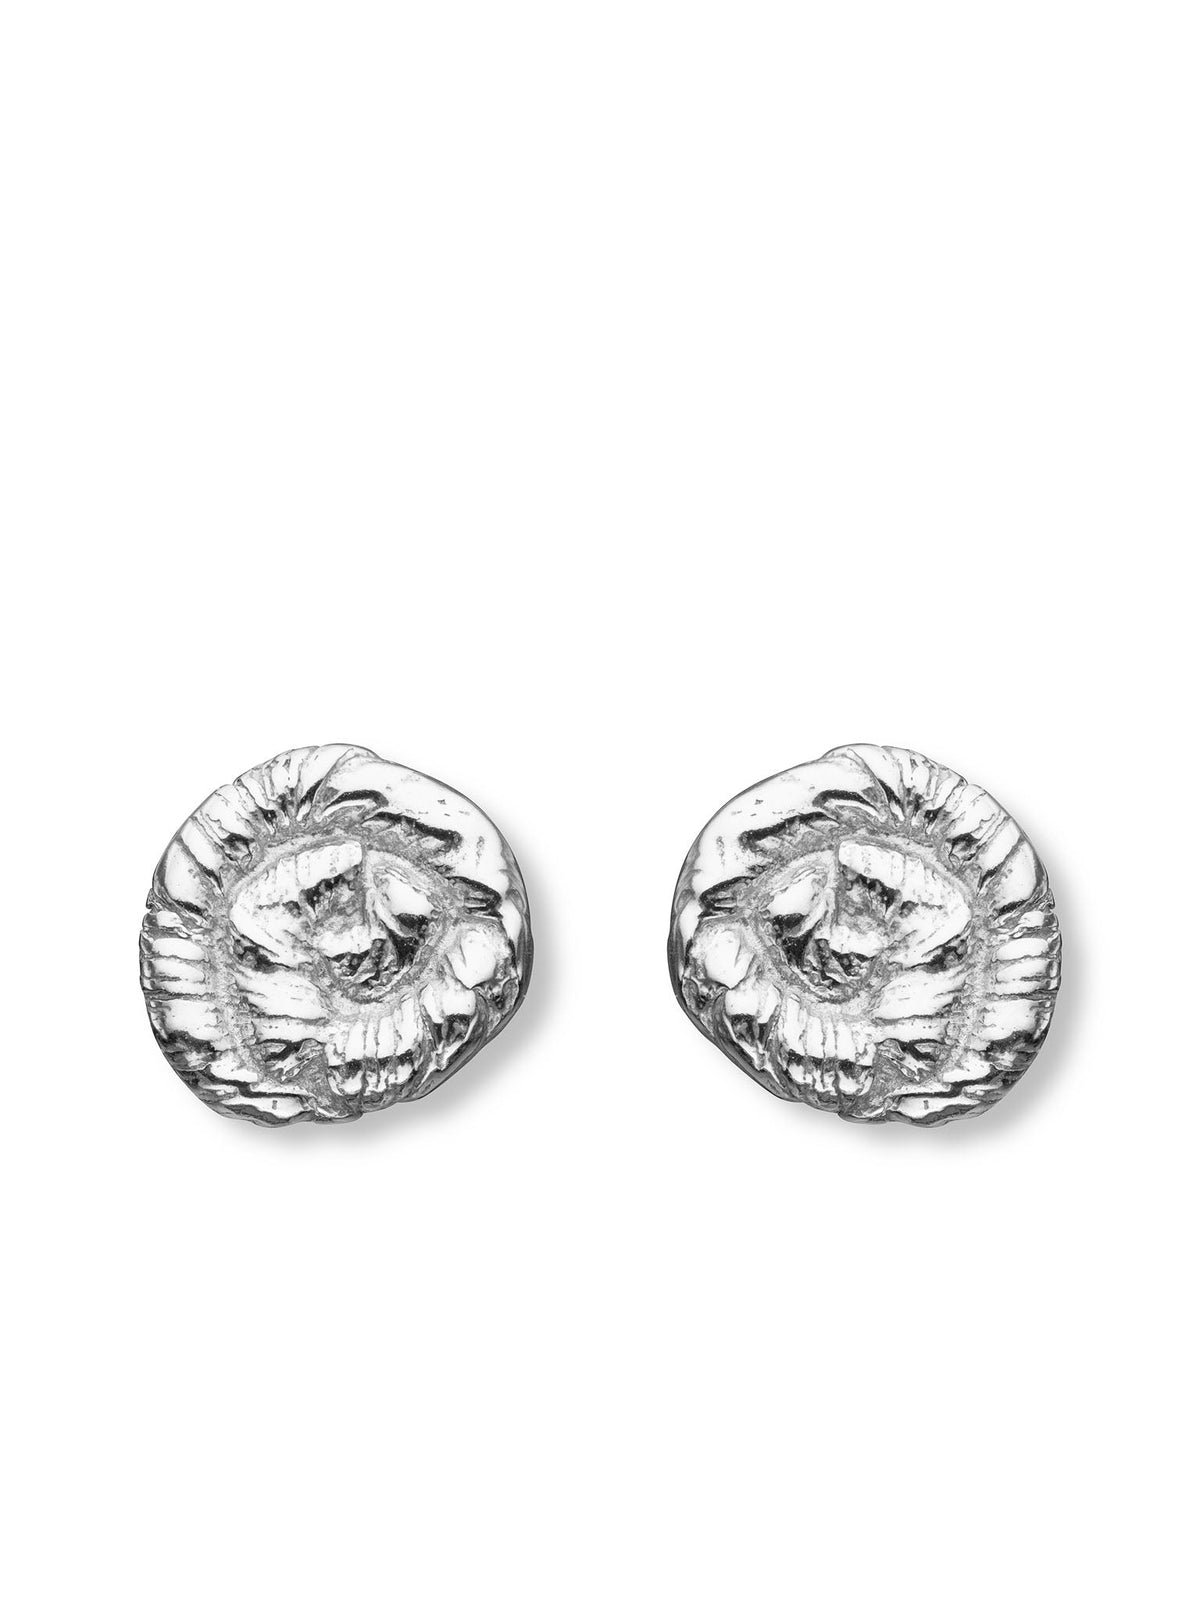 Nautilus Earrings - Silver